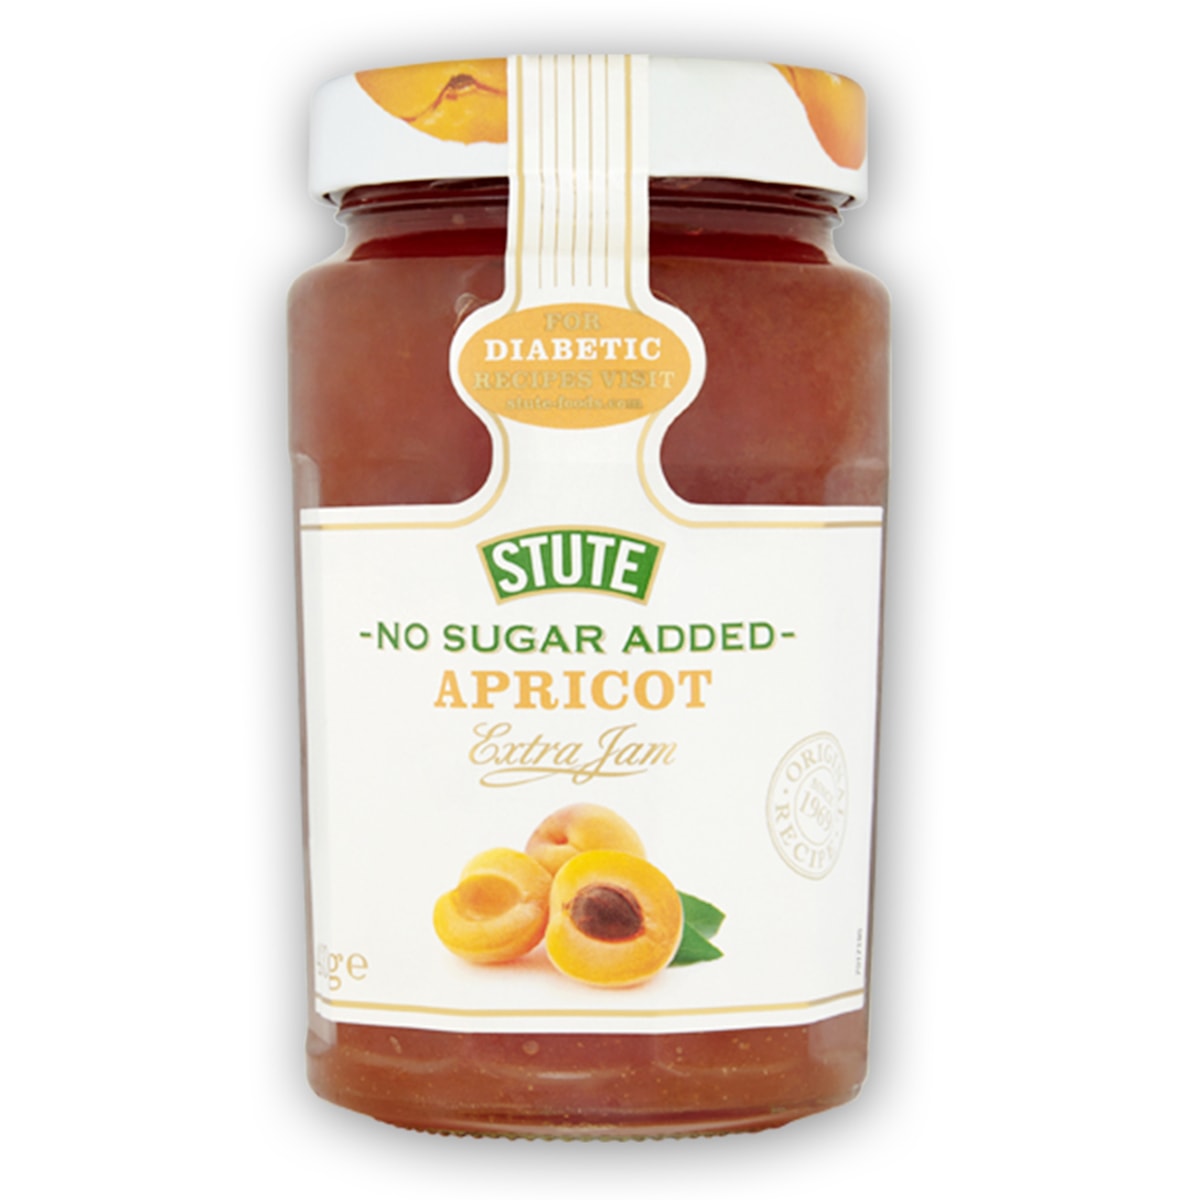 Buy Stute Diabetic Apricot Extra Jam (No Sugar Added) - 430 gm